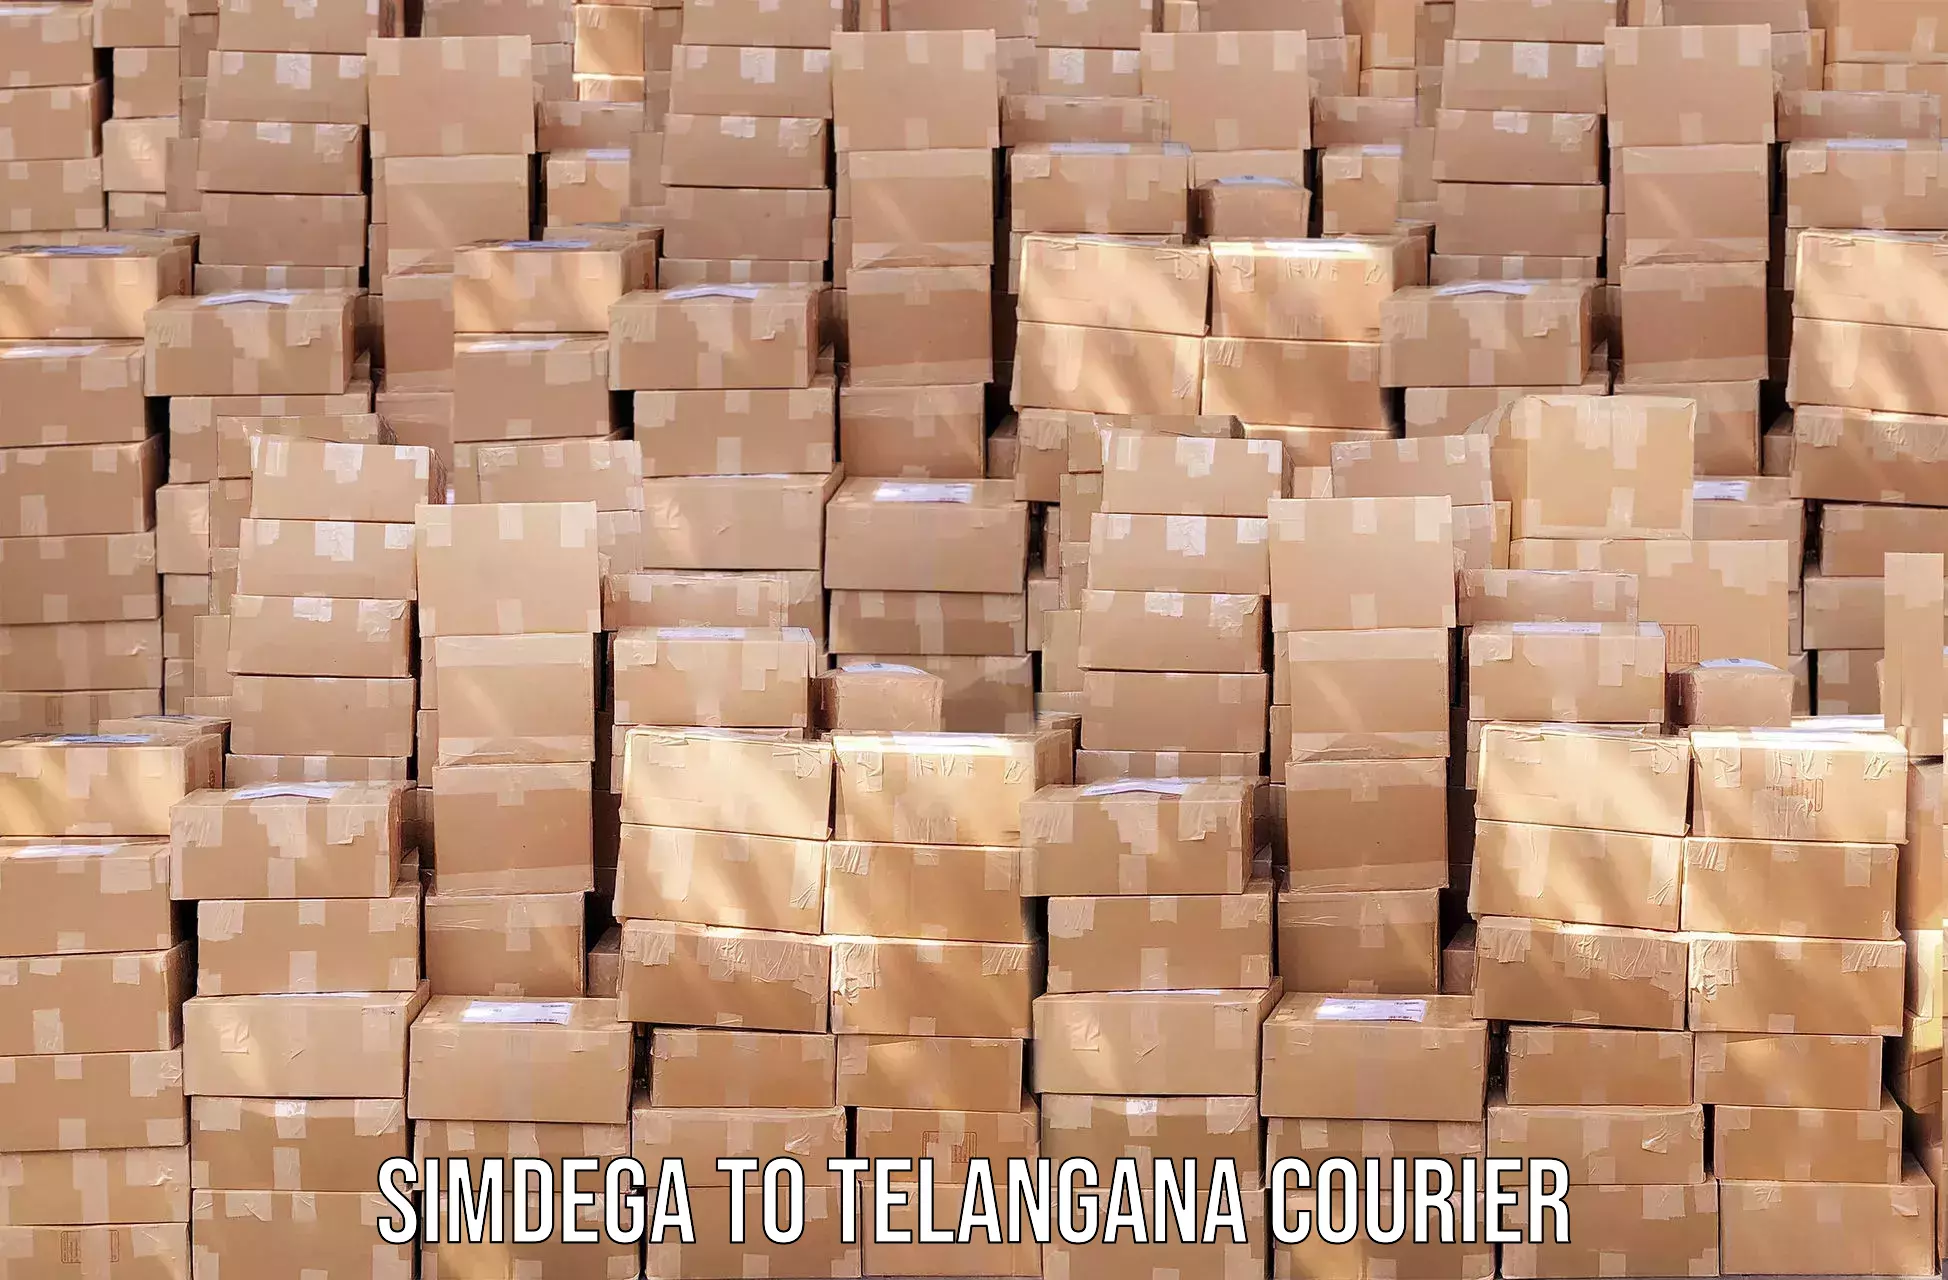 Premium courier solutions Simdega to Secunderabad